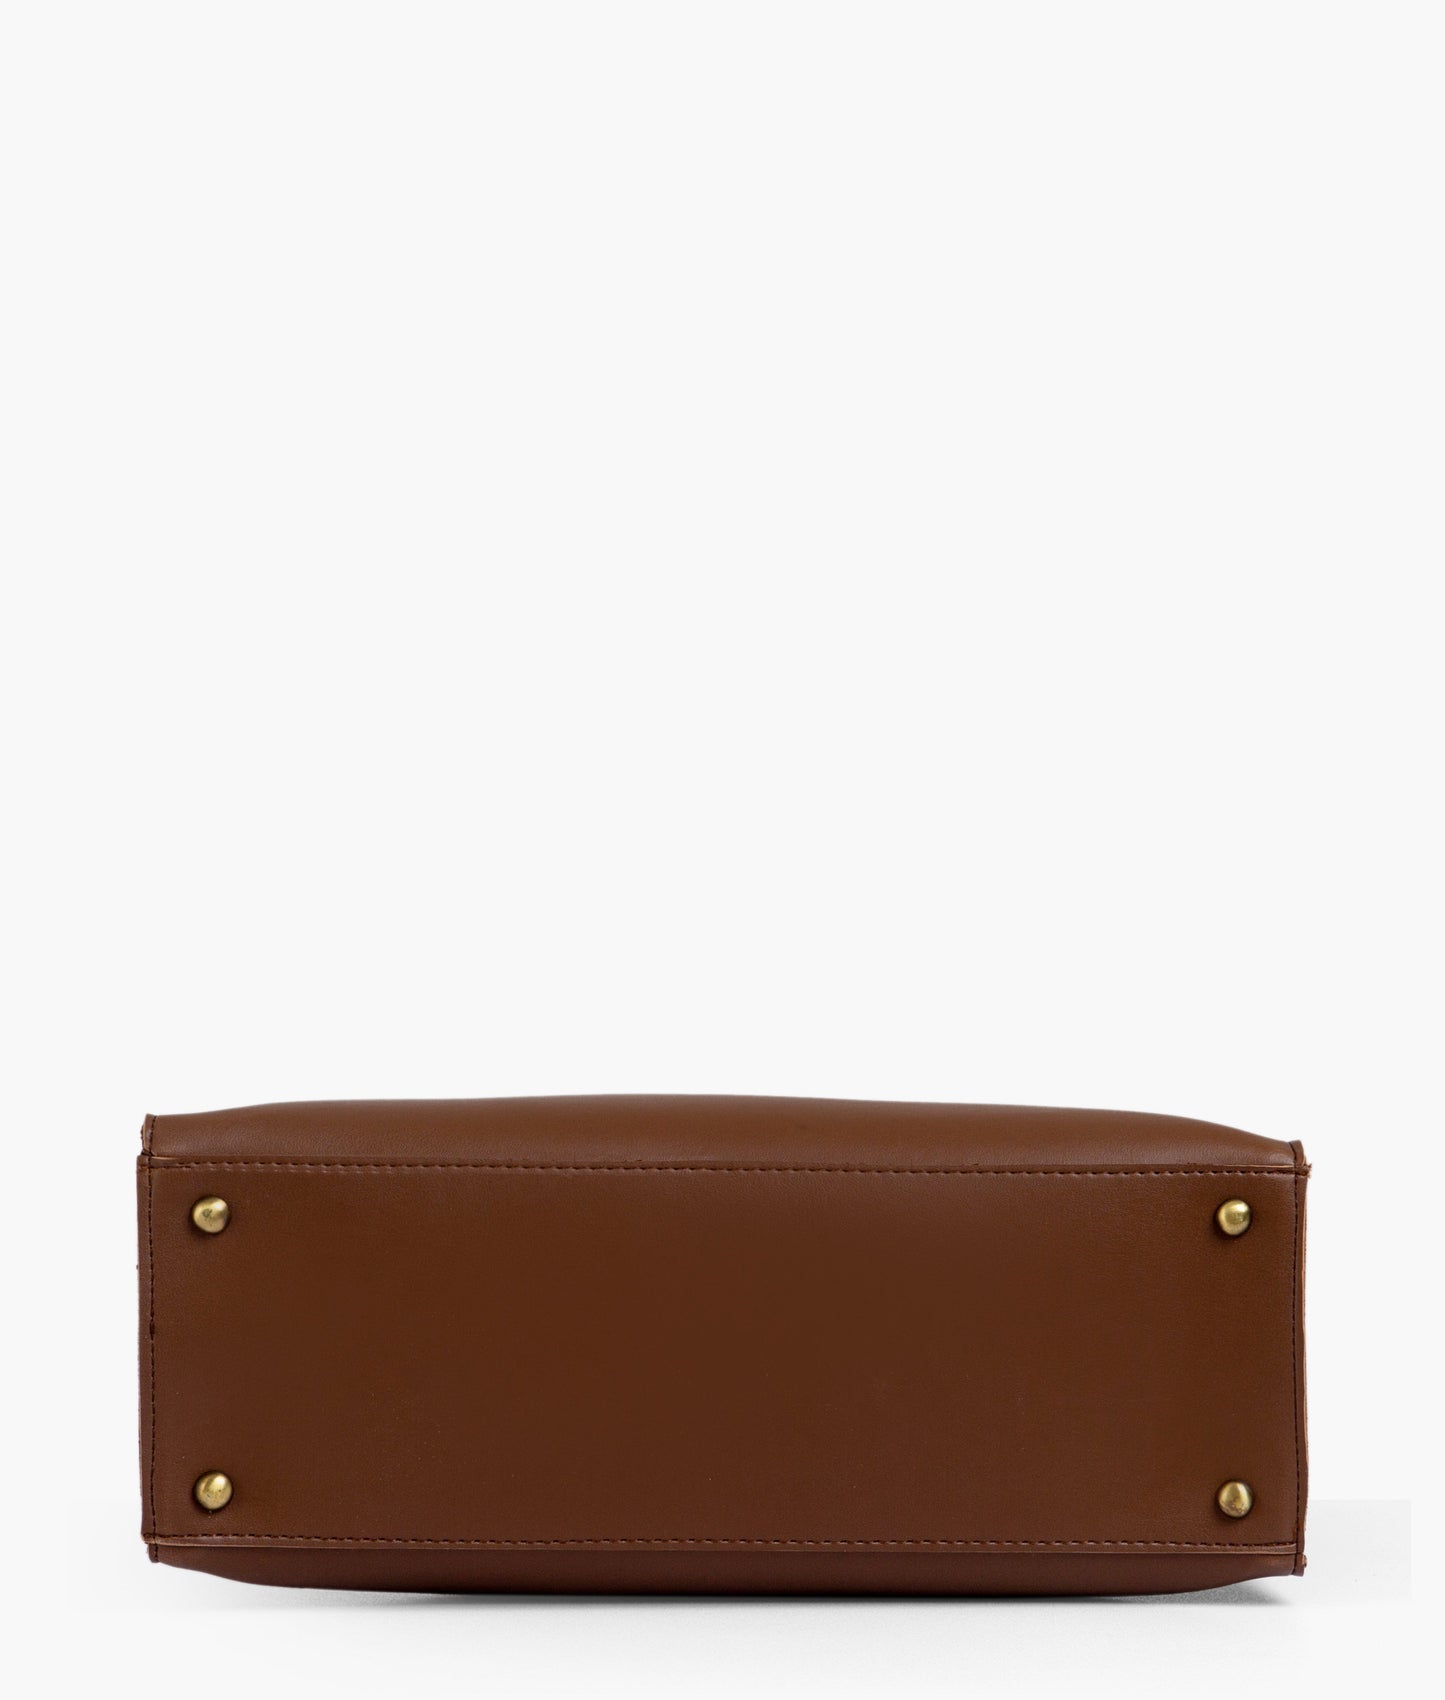 Brown Handbag For Girls 599